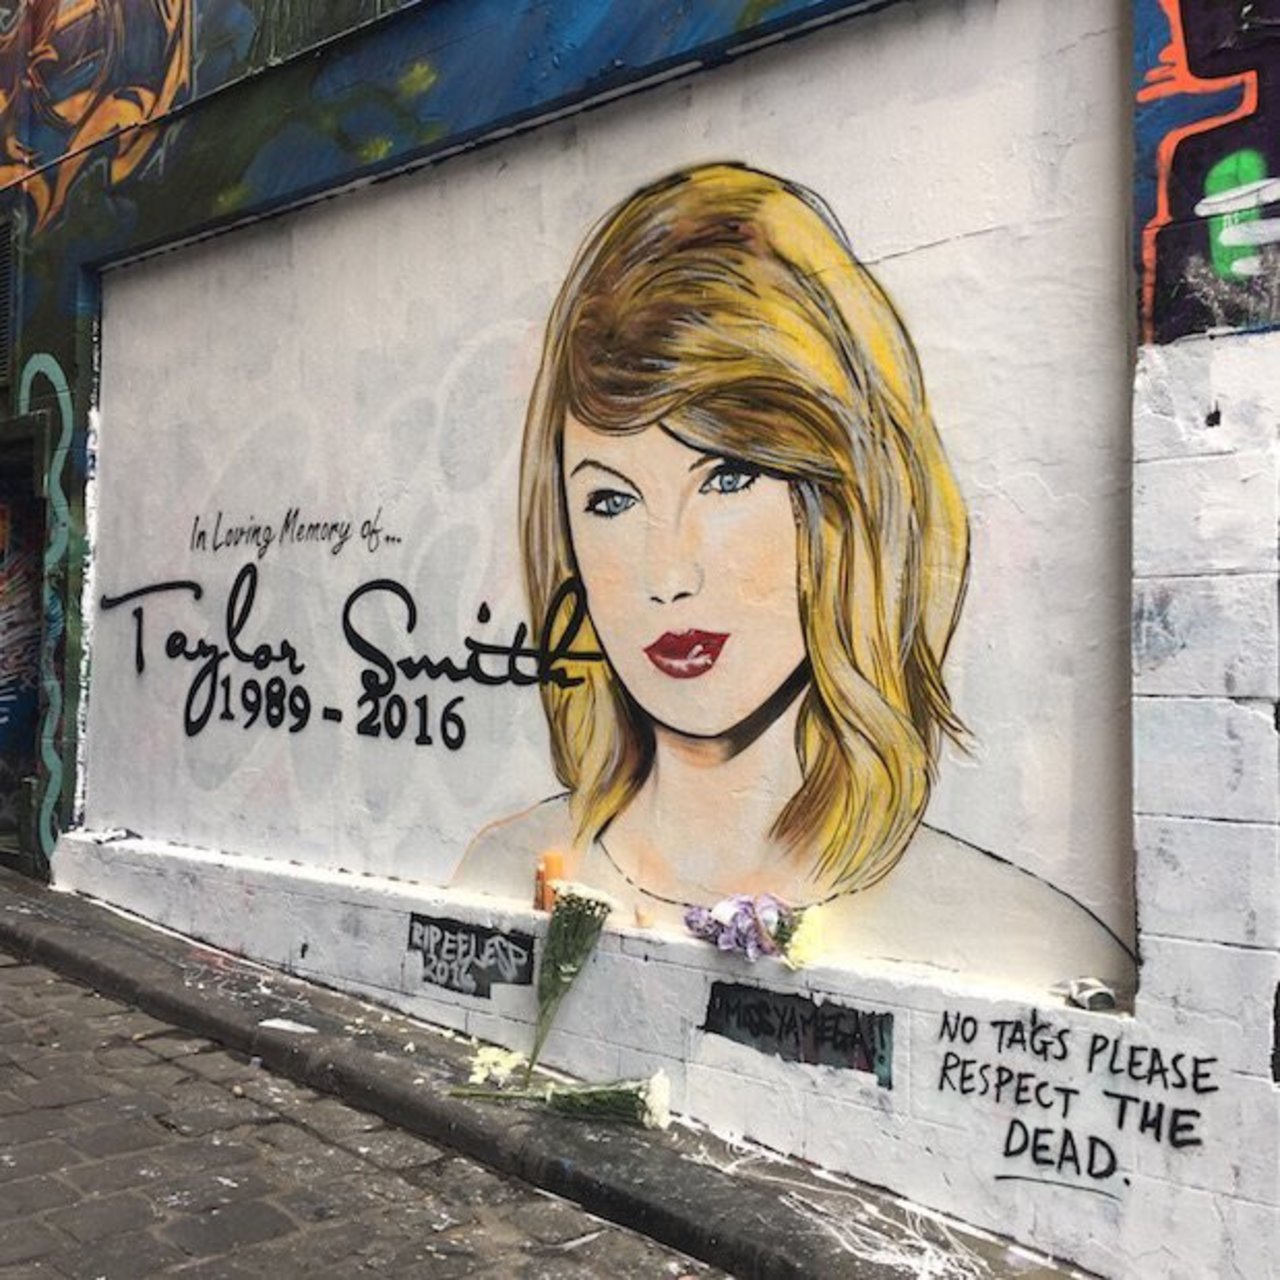 RIP Taylor Swift mural by anonymous, Melbourne, Australia #Streetart #graffiti #Melbourne #Australia #taylorswift https://t.co/0AonrFujGL